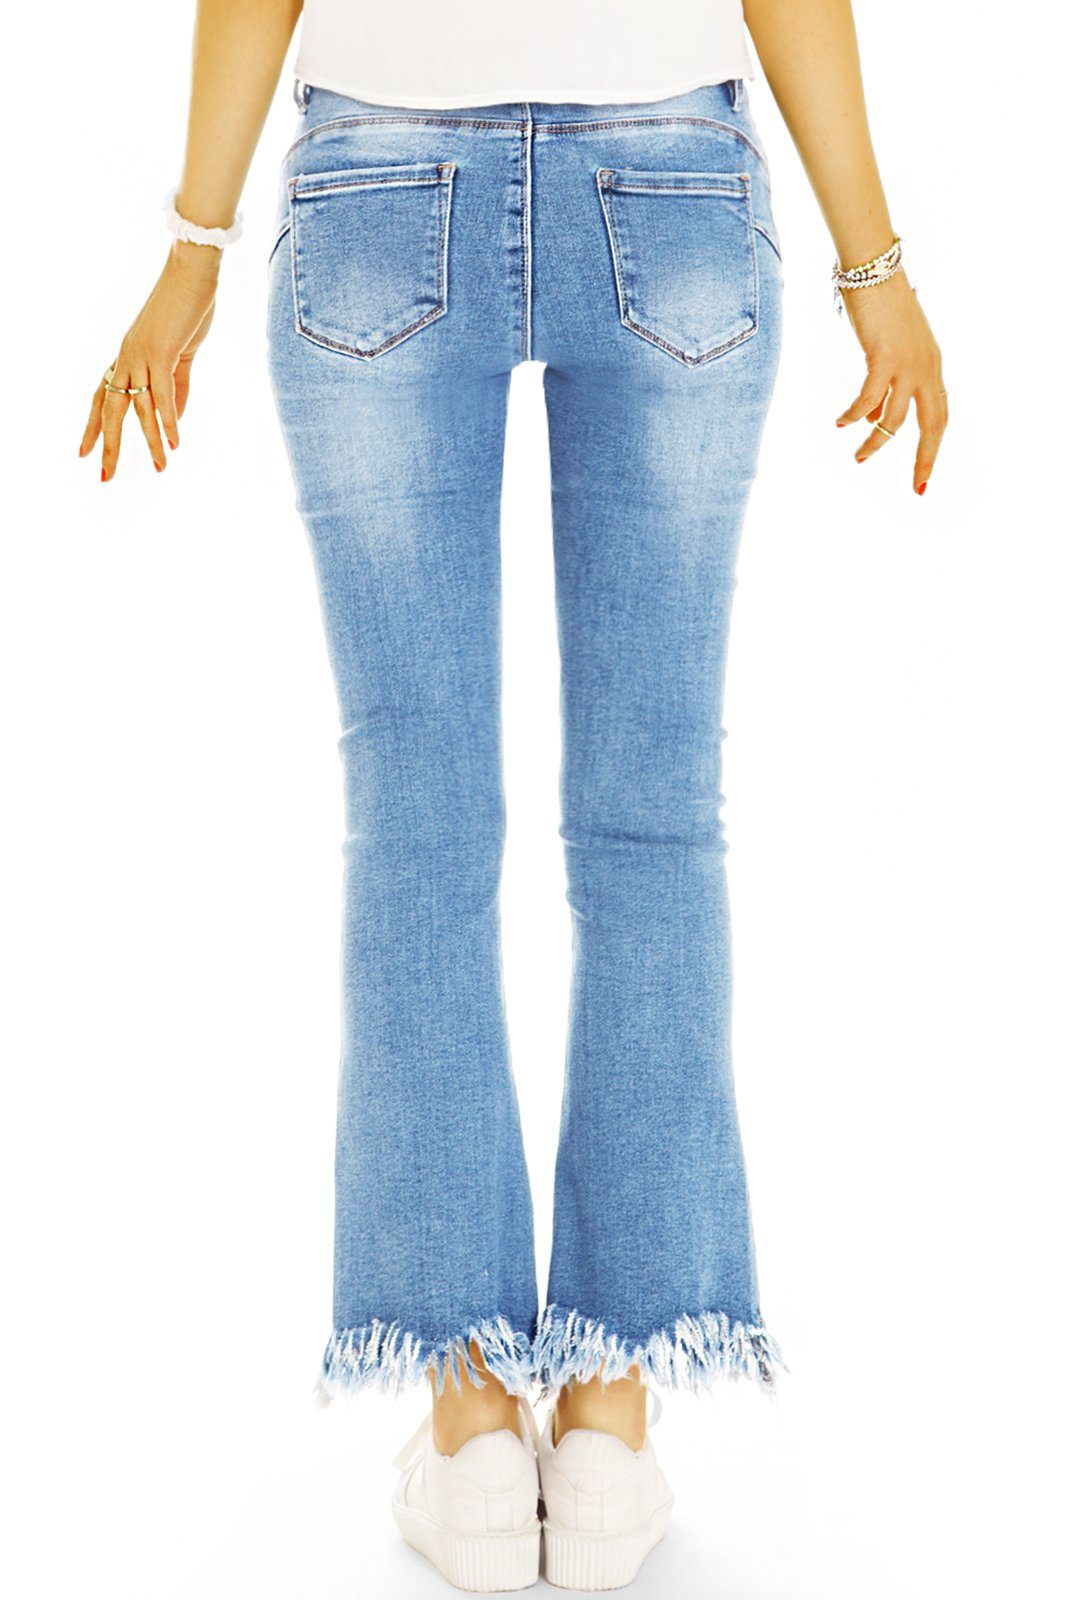 be styled Ankle-Jeans Ankle Jeans - j38p Damen stretchig medium 5-Pocket-Style mit Jeans - waist Hosen, Stretch-Anteil, Bootcut